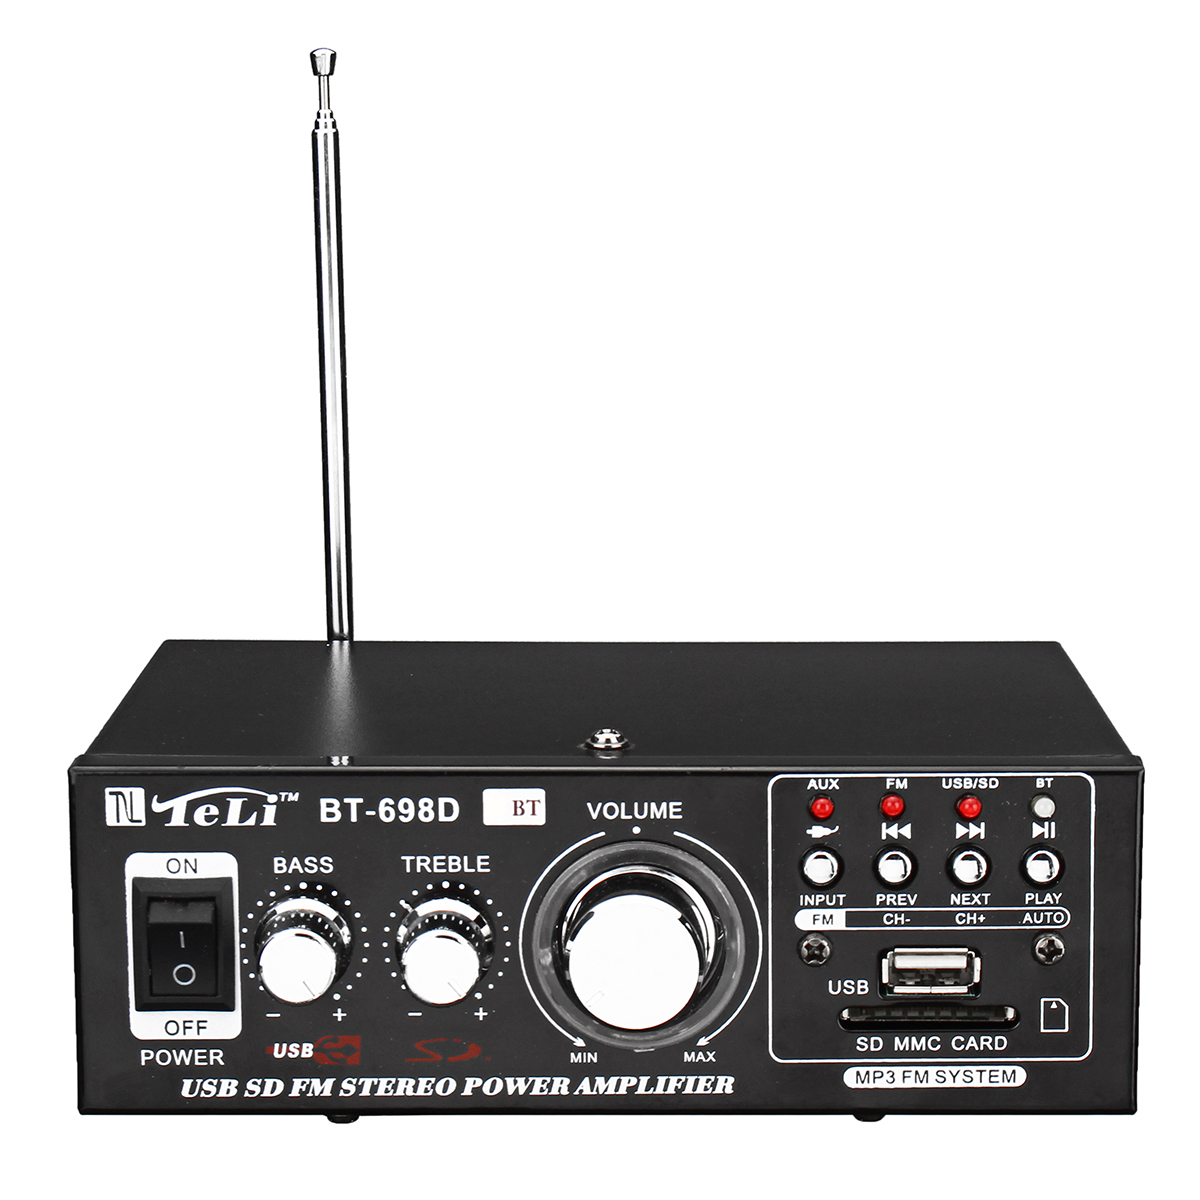 USB-SD-HIFI-Power-Amplifier-HiFi-Digital-Audio-Stereo-Amplifier-bluetooth-FM-Radio-Equipment-1423186-7